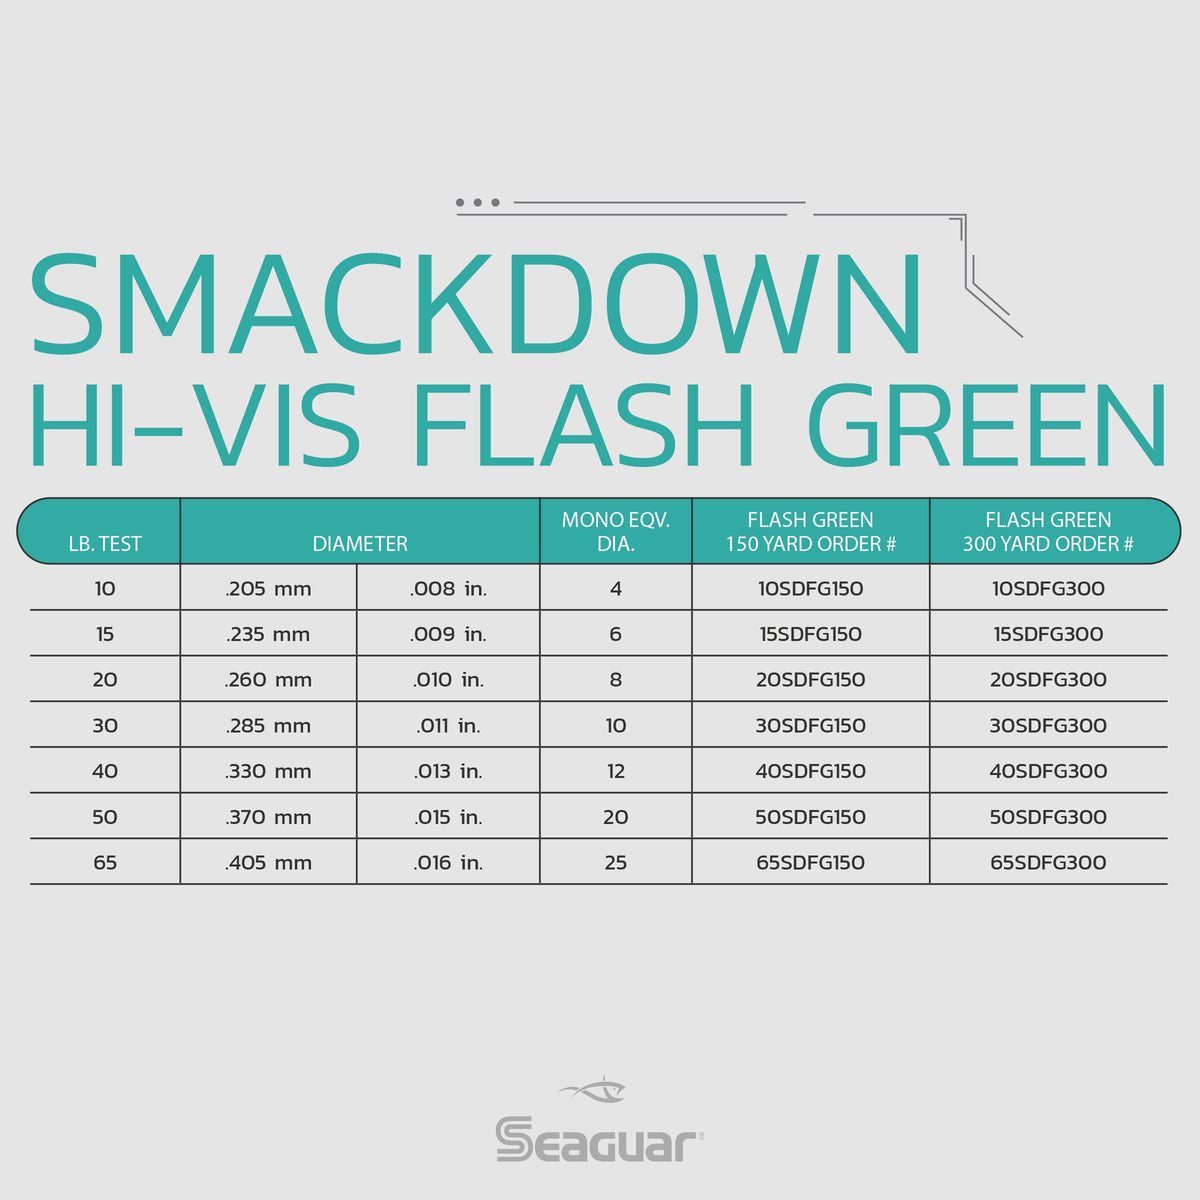 Smackdown Flash Green